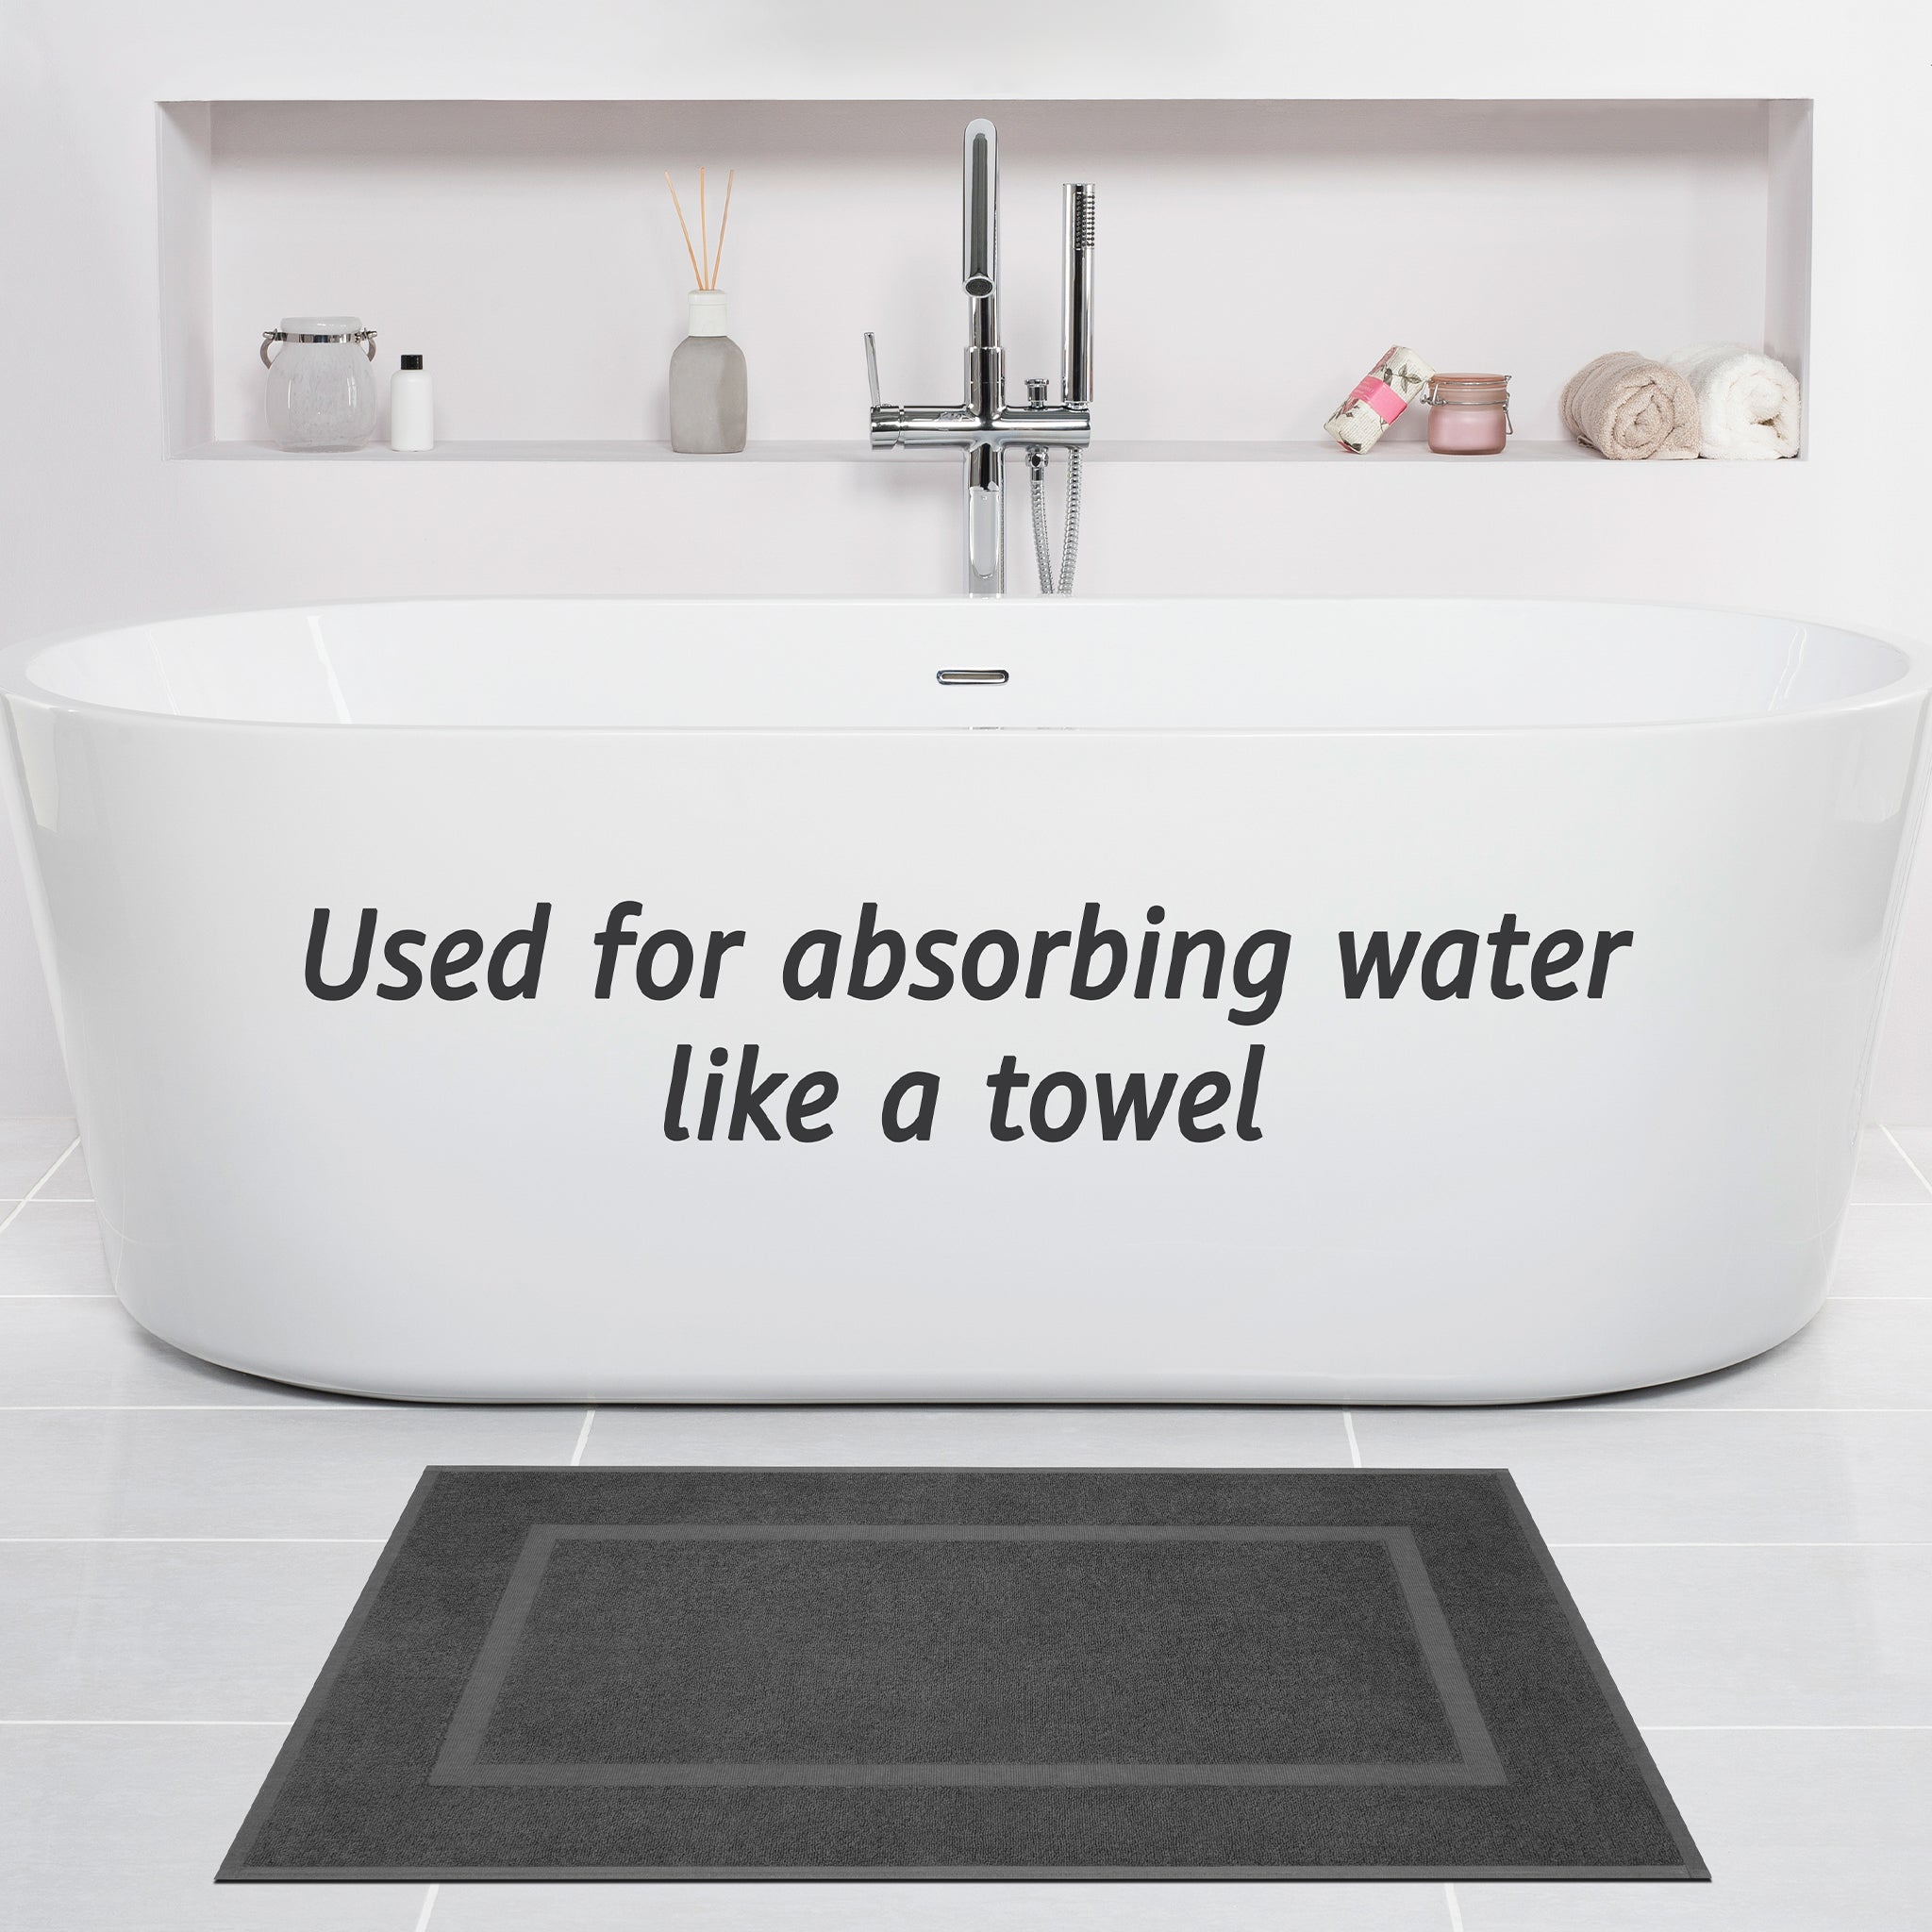 American Soft Linen Bekos 100% Cotton Bath Mat Set, 2 Piece 20x34 inches Bath Mats for Bathroom